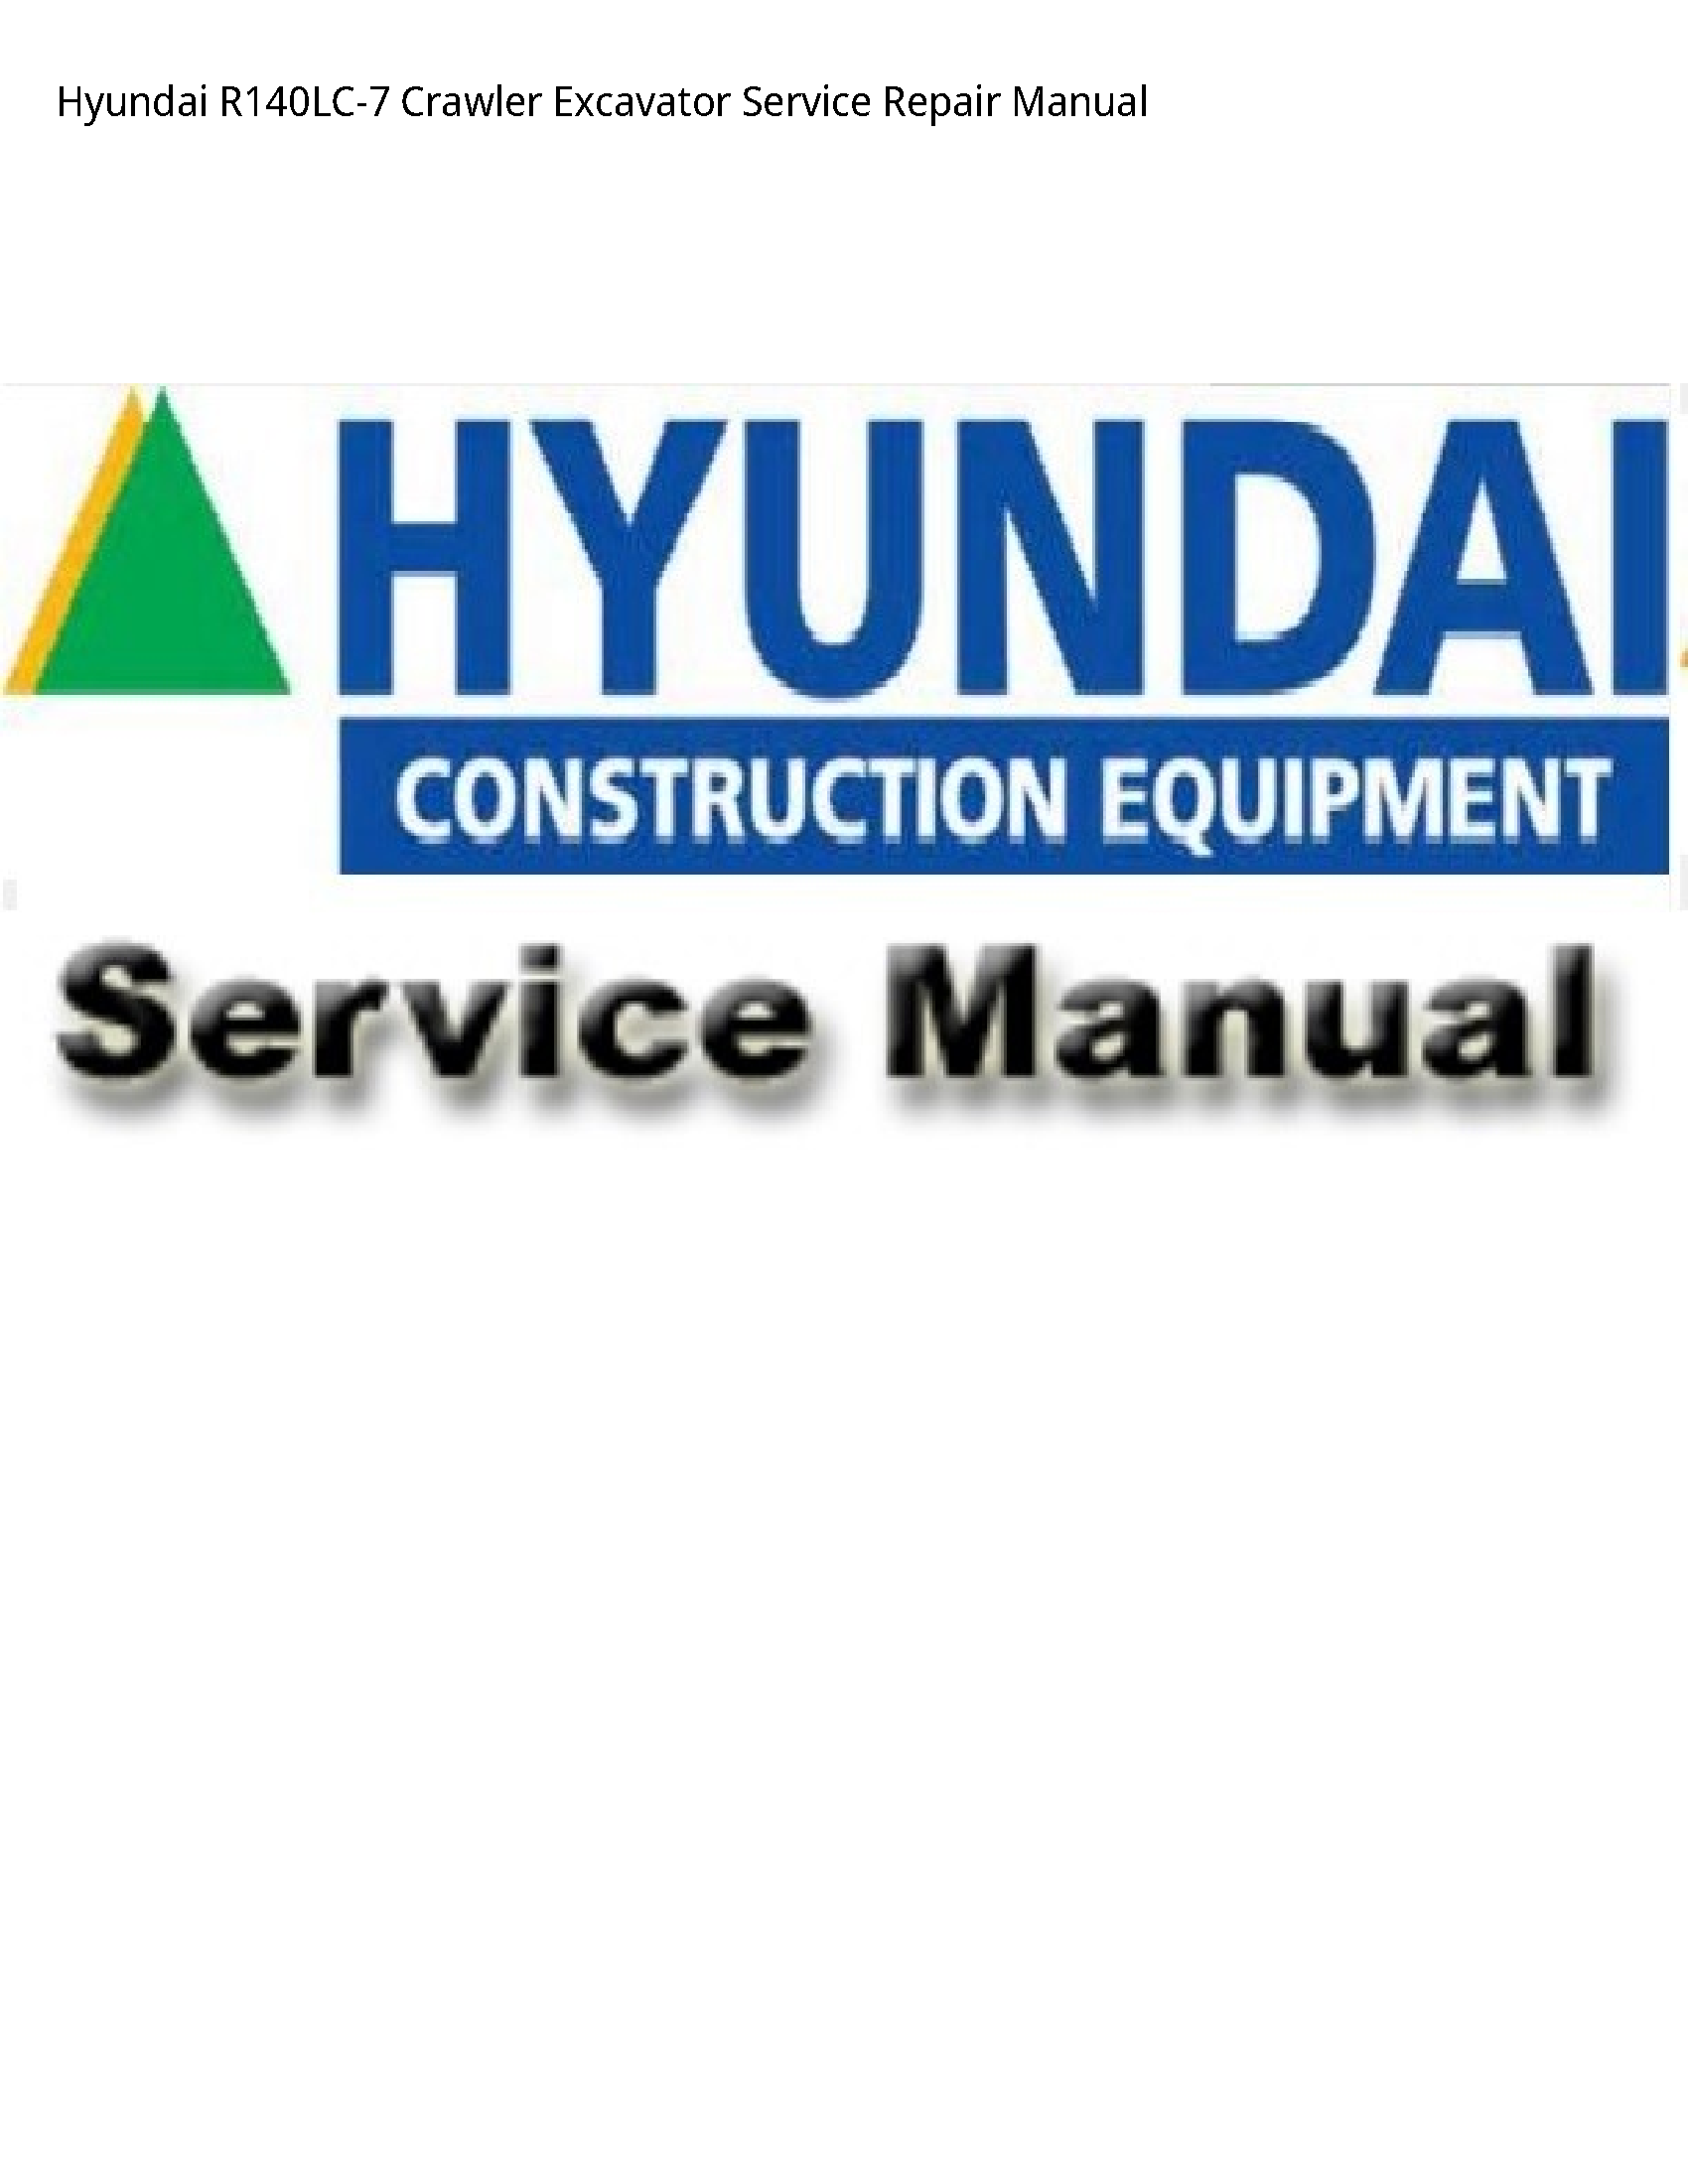 Hyundai R140LC-7 Crawler Excavator manual